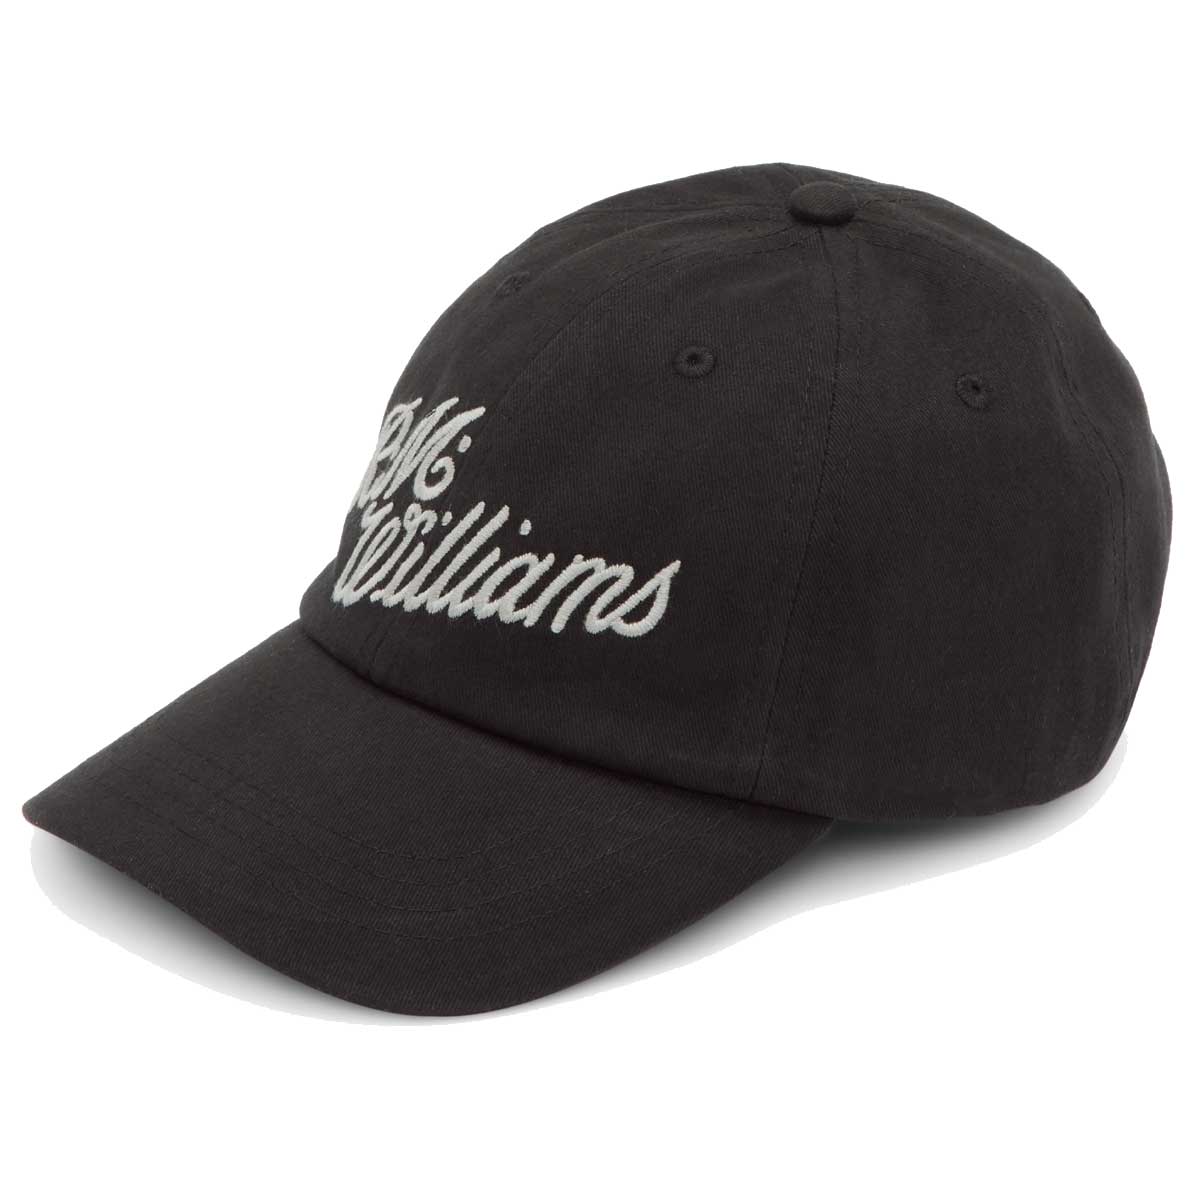 RM WILLIAMS Cap - Script Logo - Black & Silver